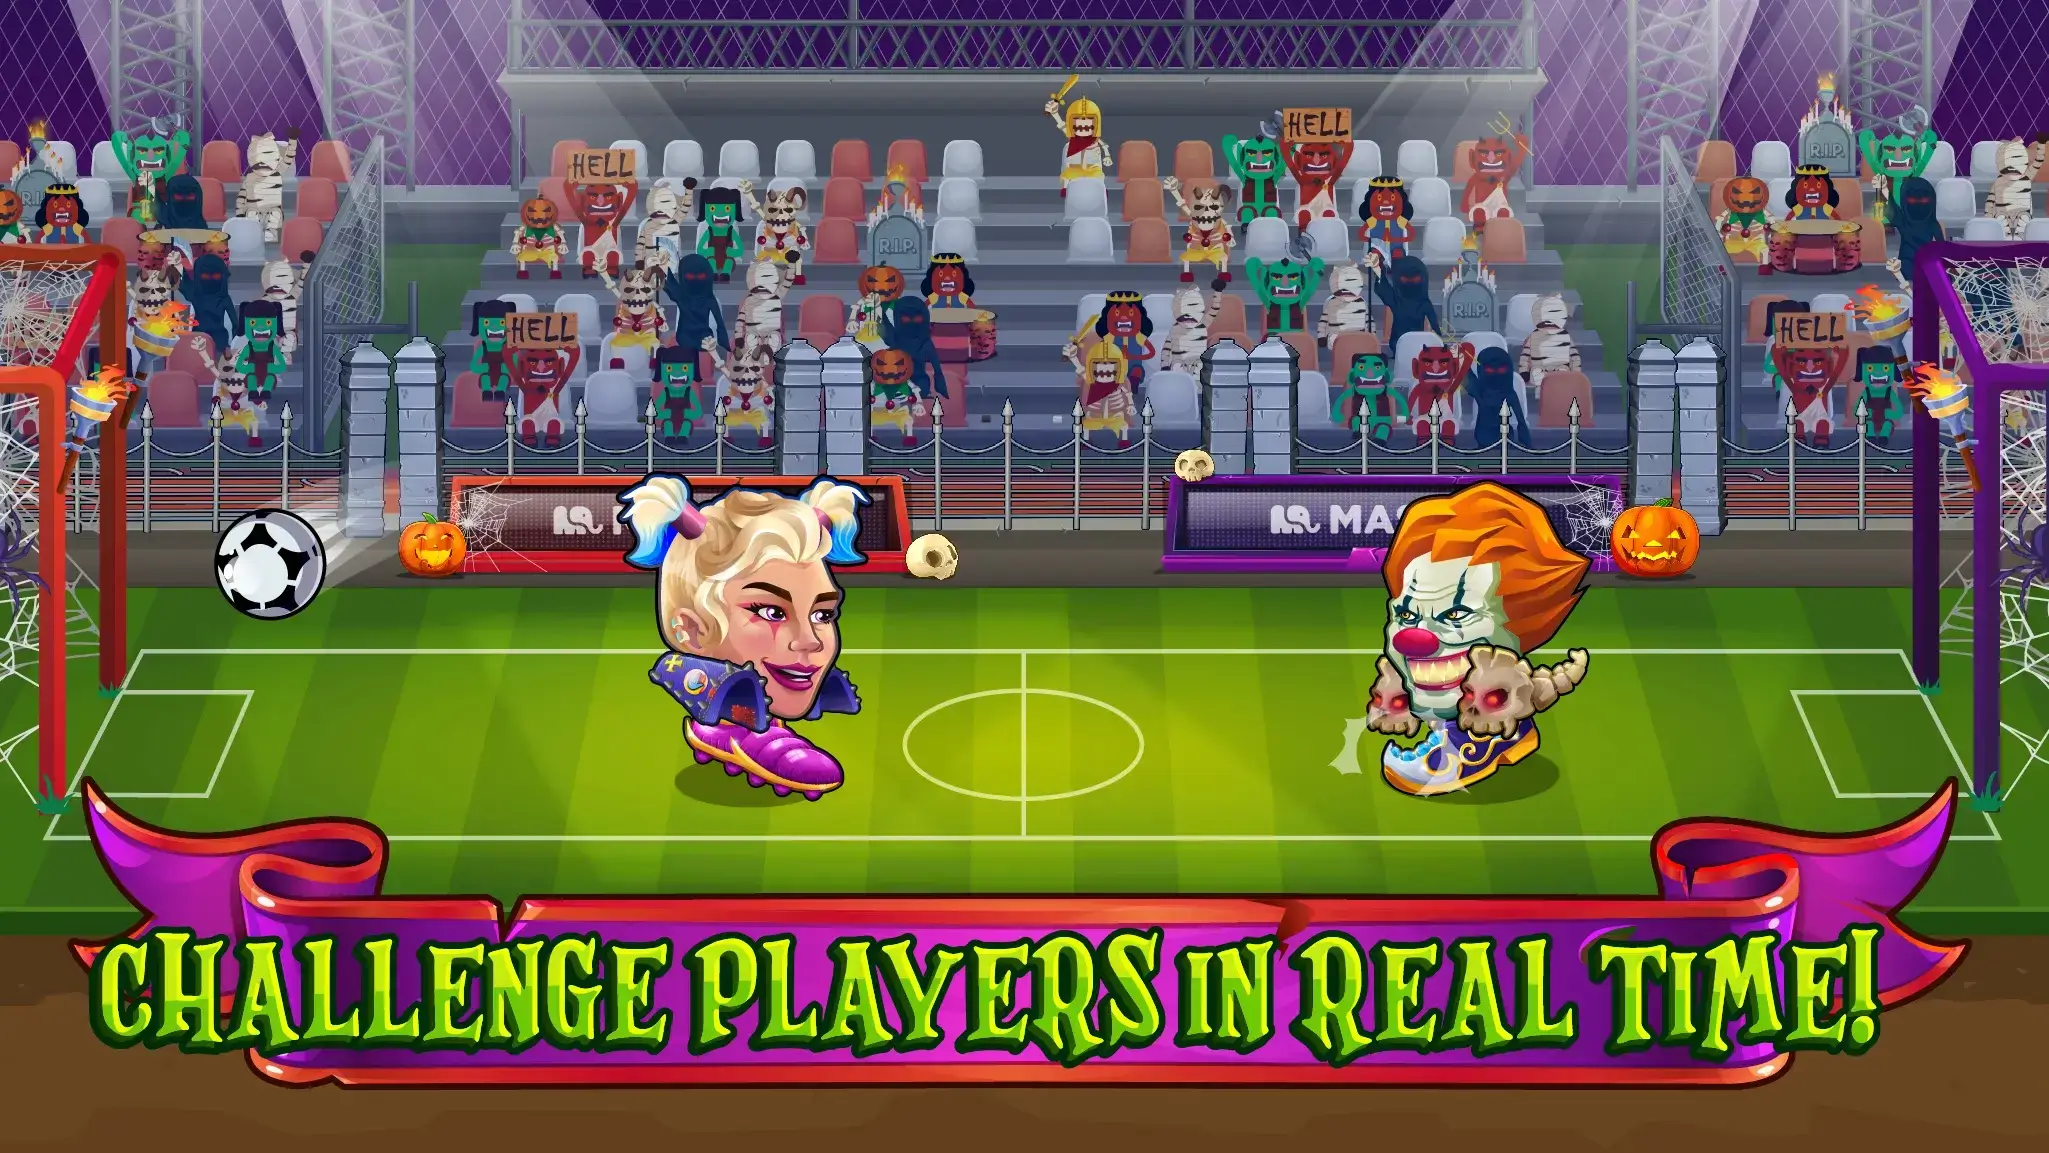 Head Ball 2 - Online Football – Apps on Google Play